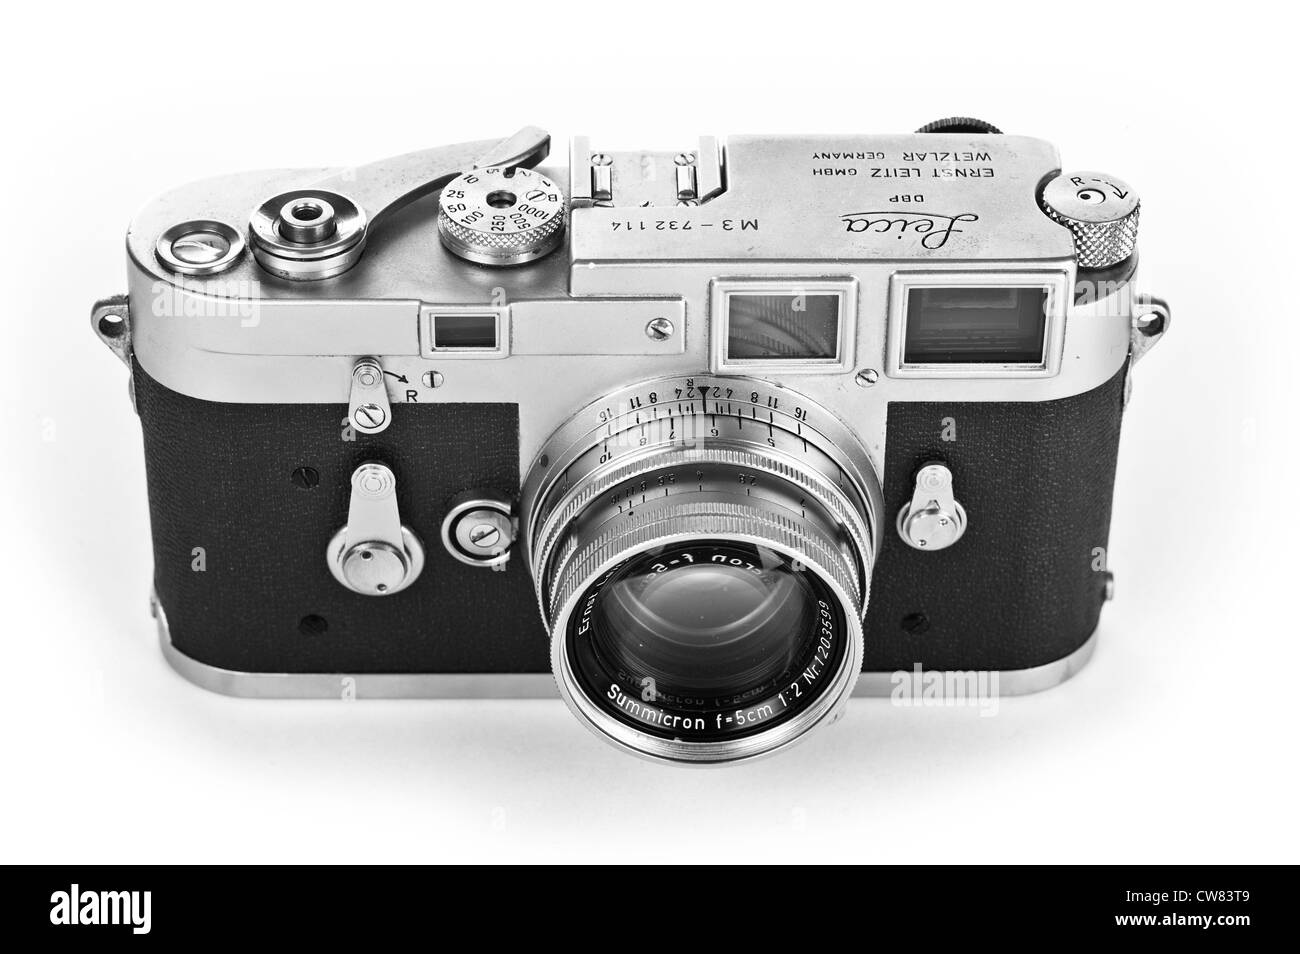 Leica M3 Leitz Rangefinder camera on White Background with